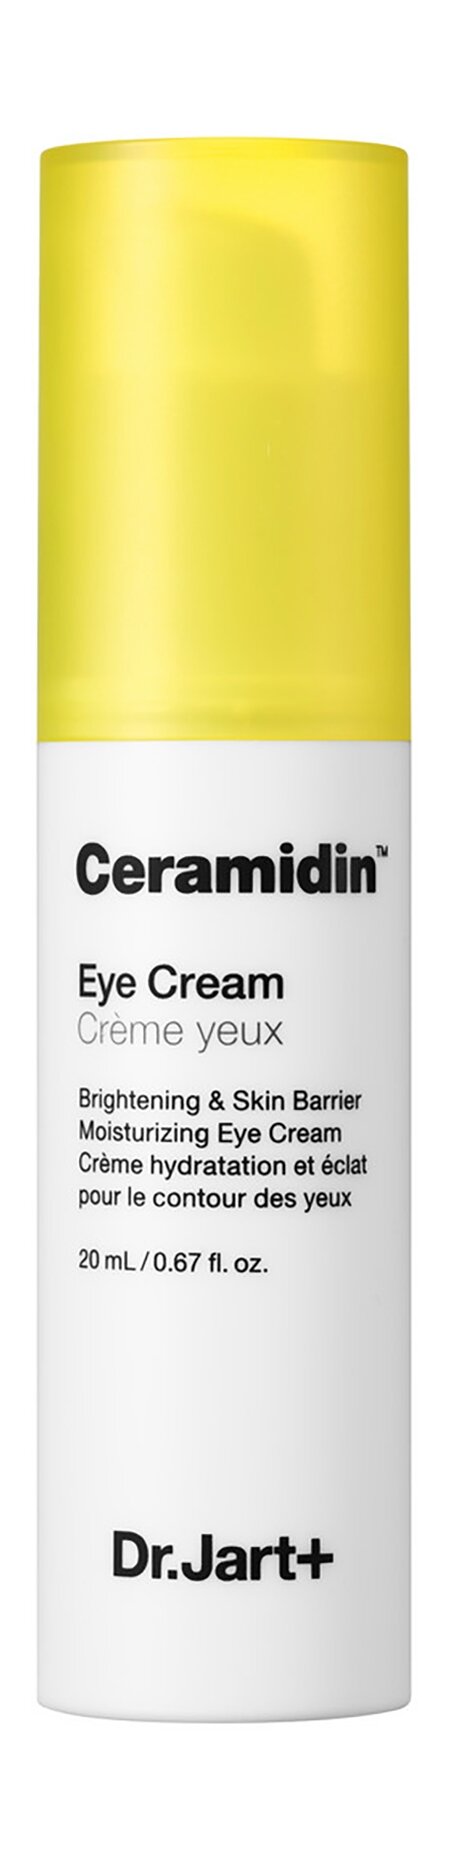 Увлажняющий осветляющий крем для области вокруг глаз Dr.Jart Ceramidin Eye Cream /20 мл/гр.